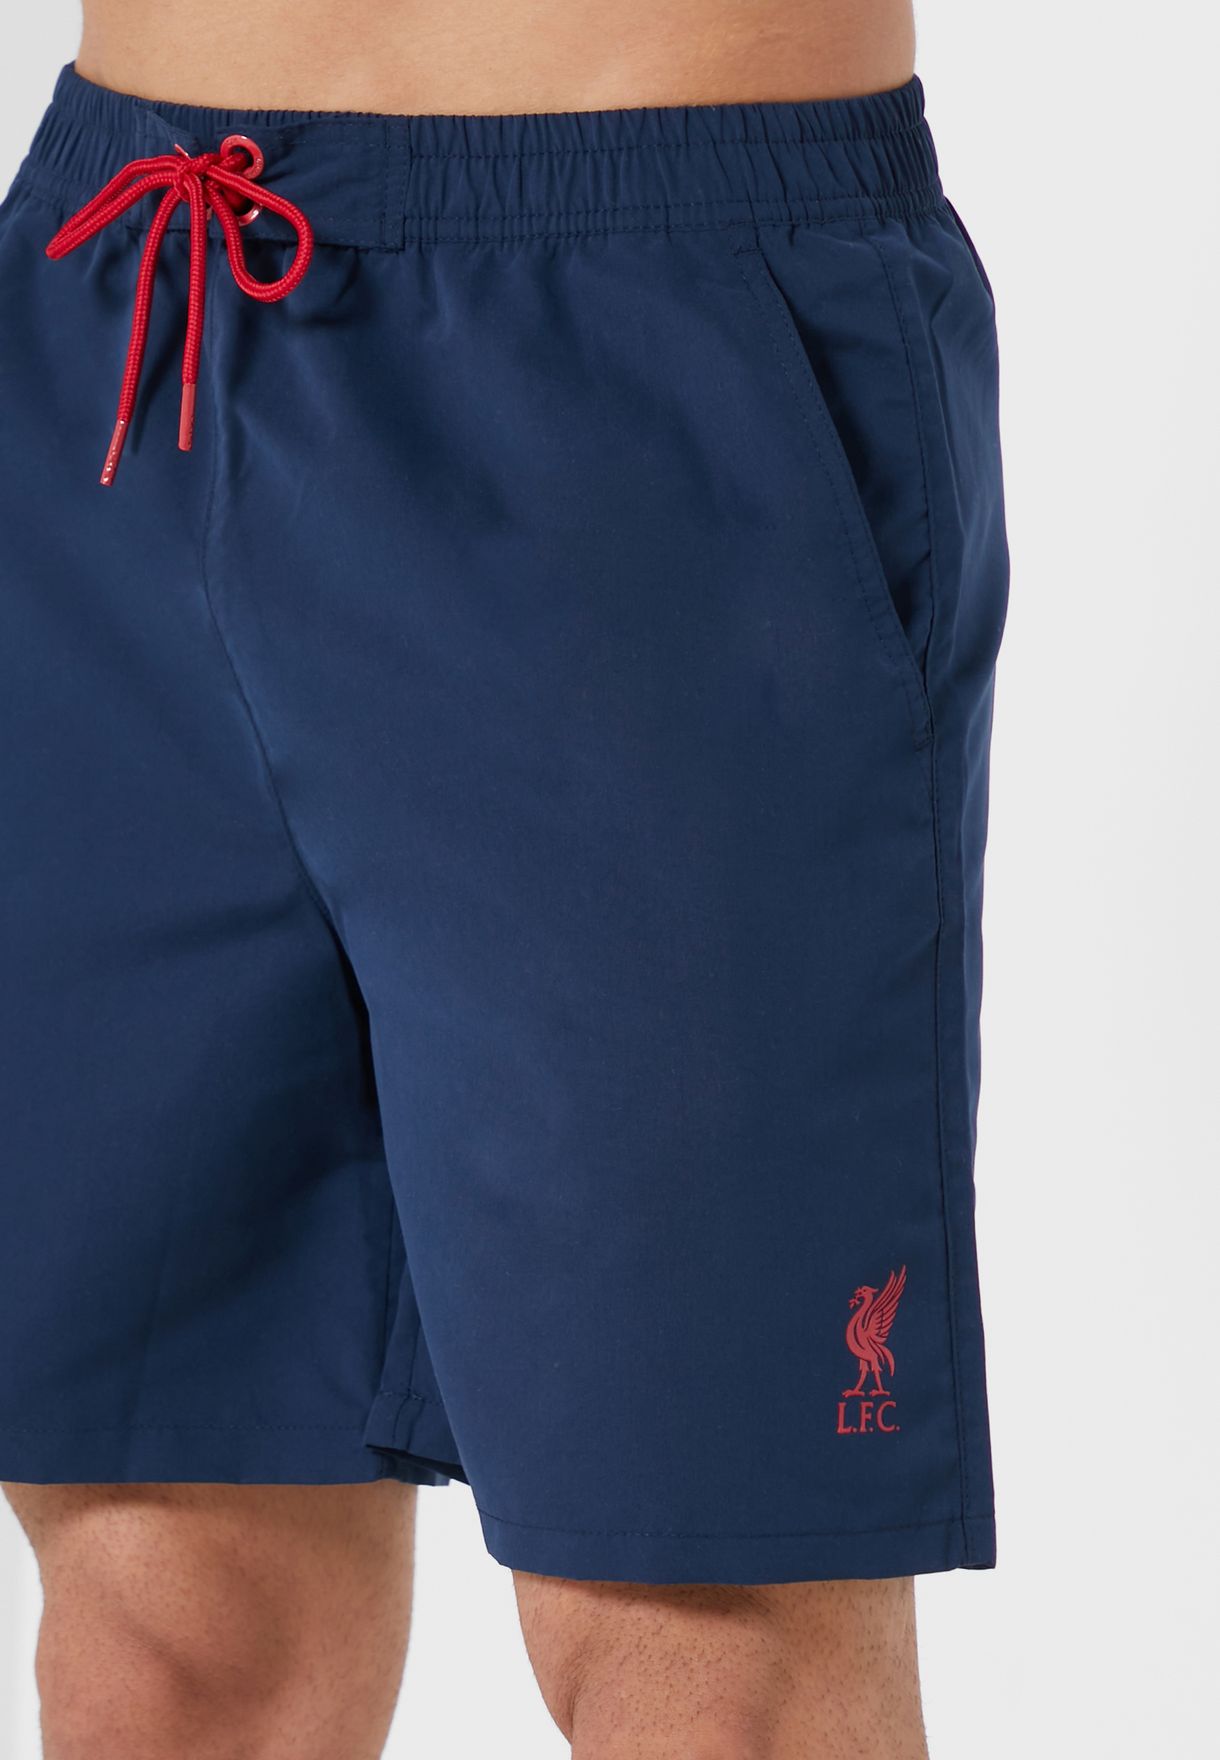 Liverpool F.C NAVY - XX-Large Board Shorts 